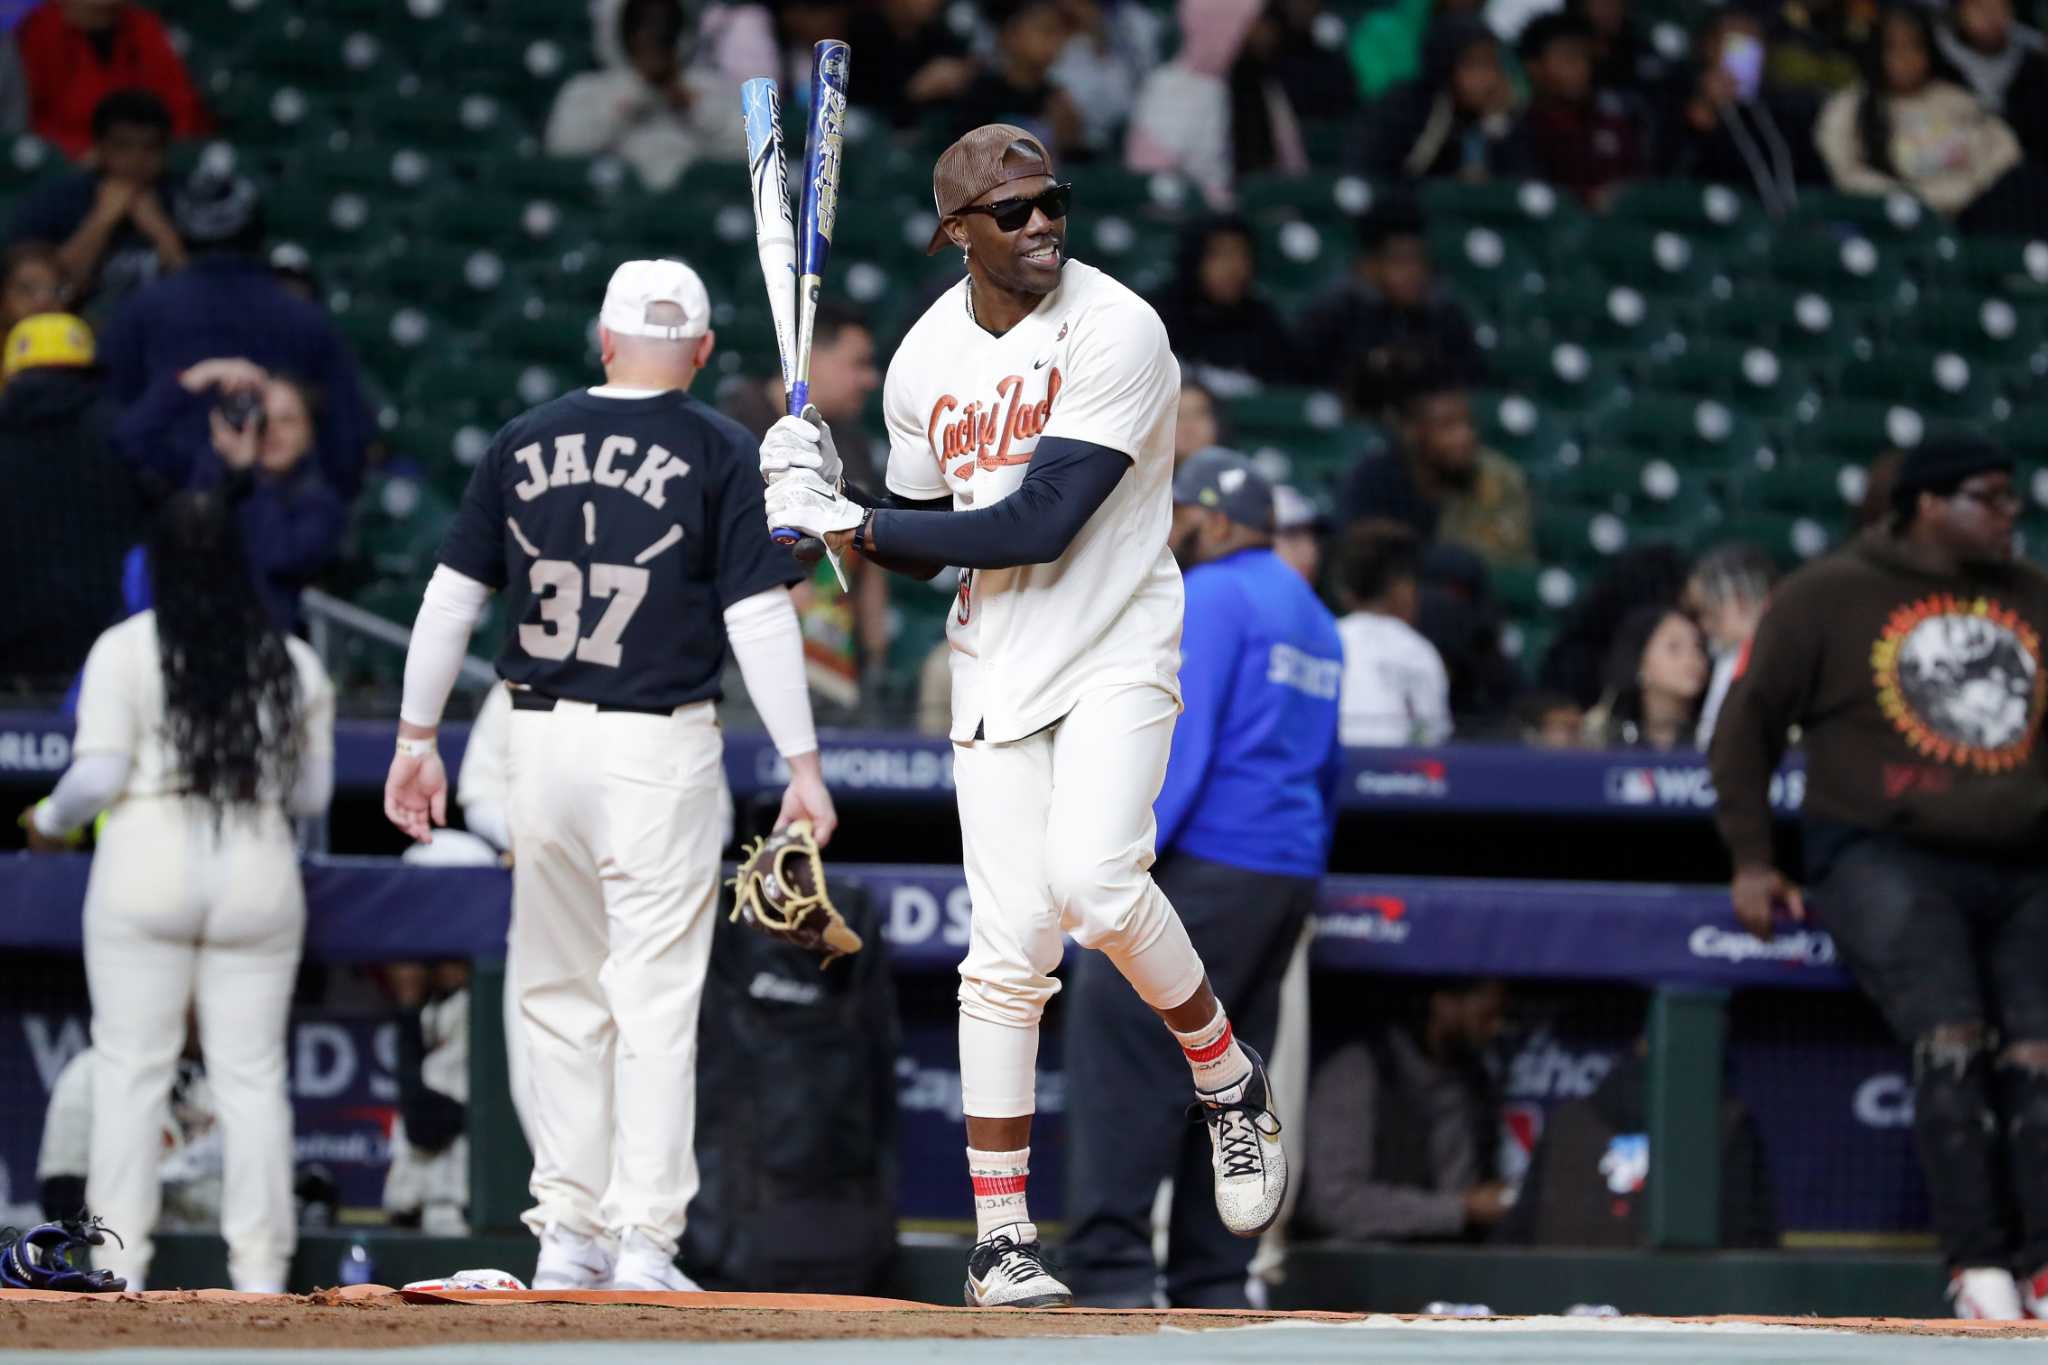 Cactus Jack x Houston Astros Baseball Uniform